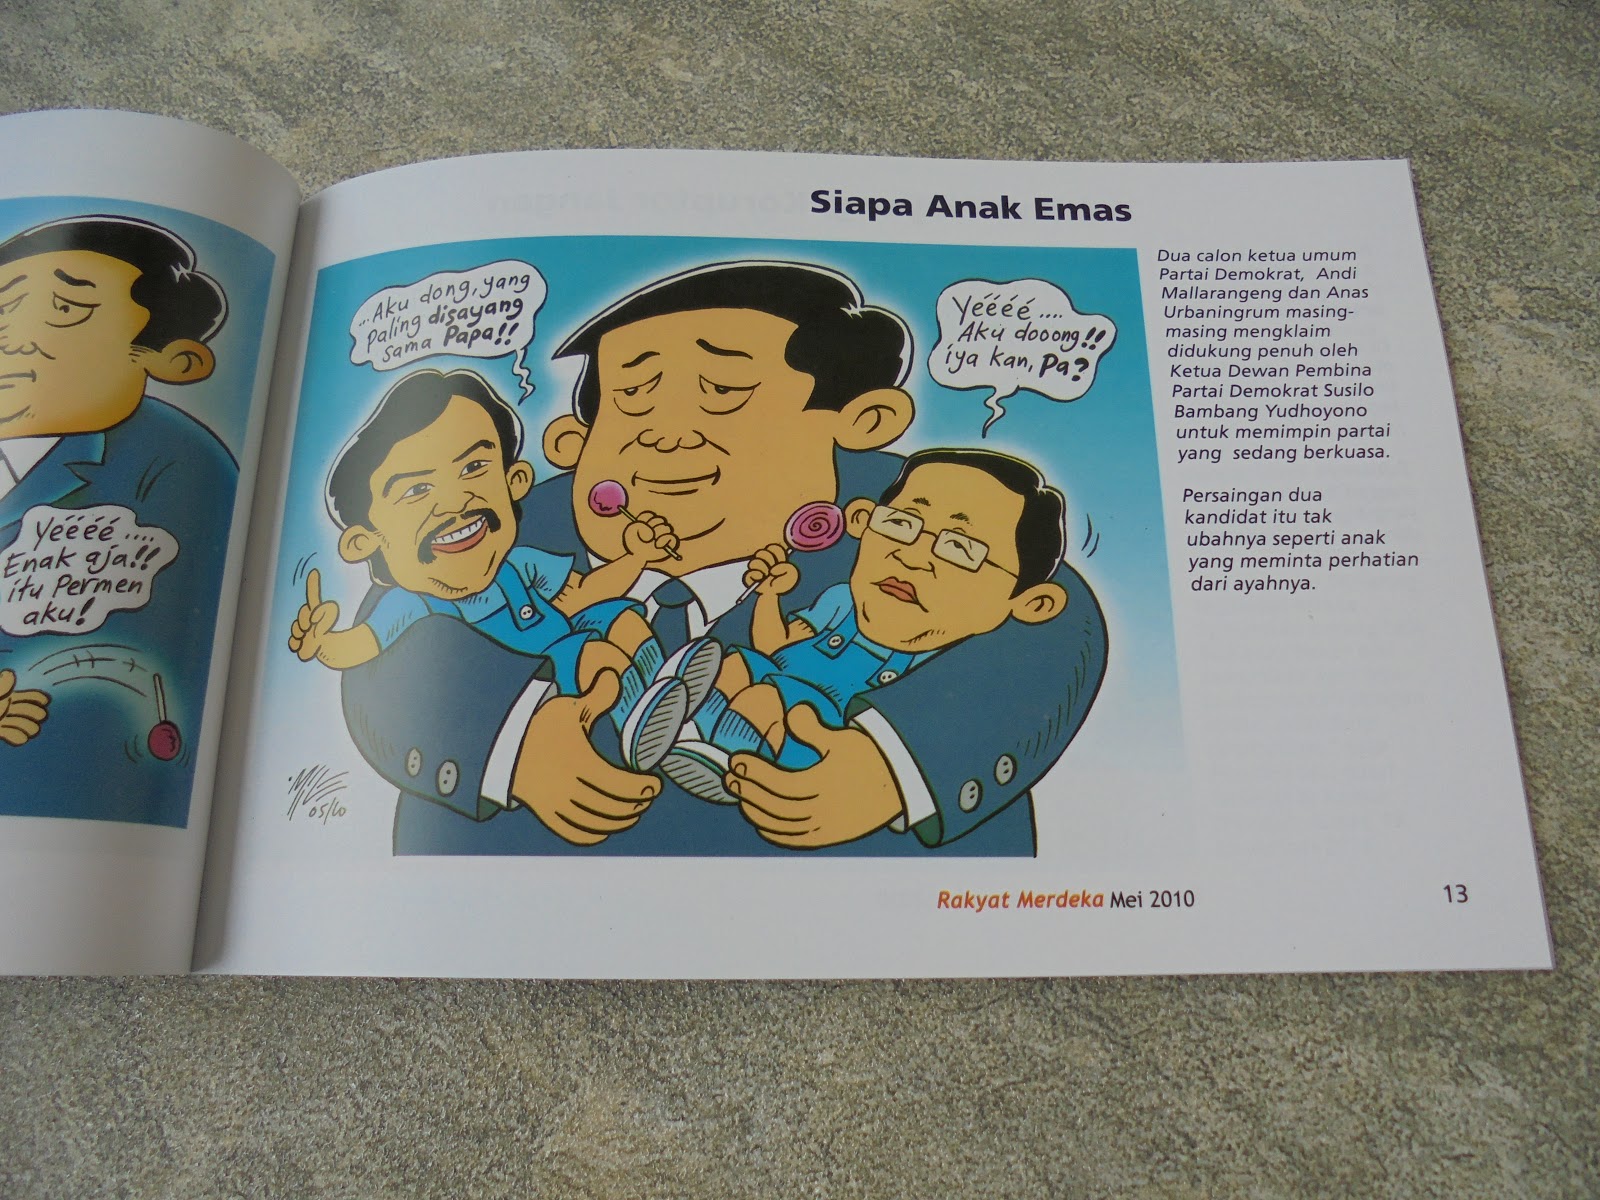 Toko Buku Bekas Online Paksrimo 2 Politik Santun Dalam Kartun SOLD